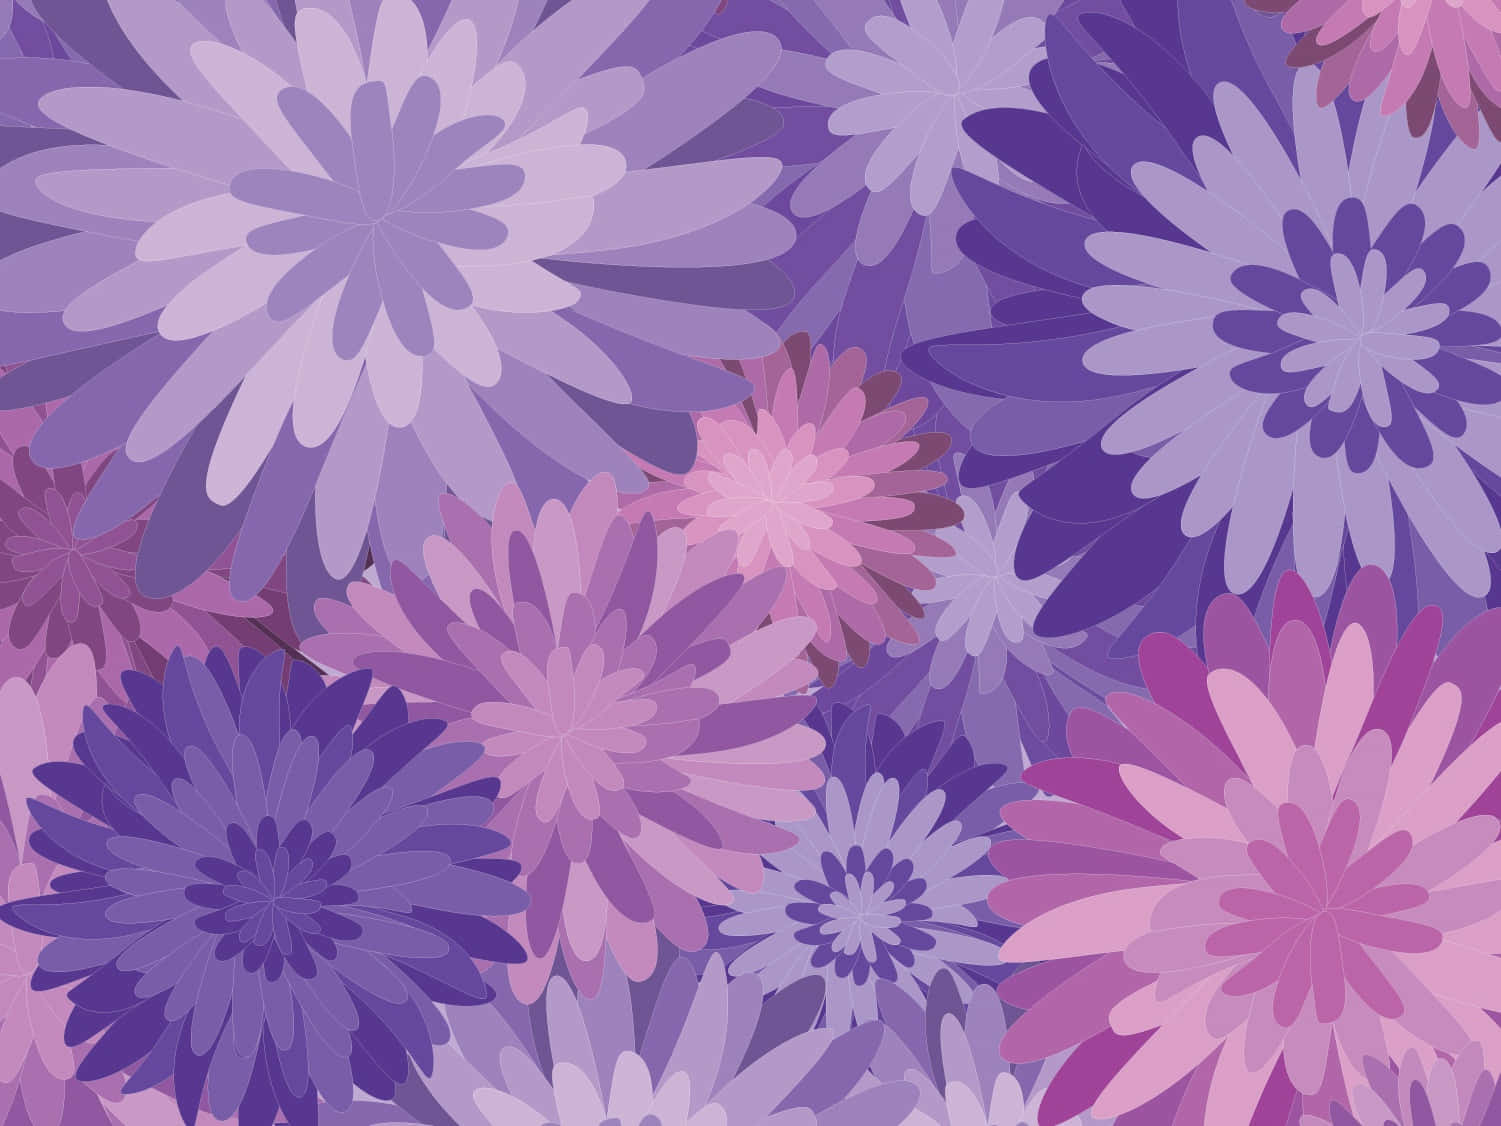 "Soft Purple Floral Background"